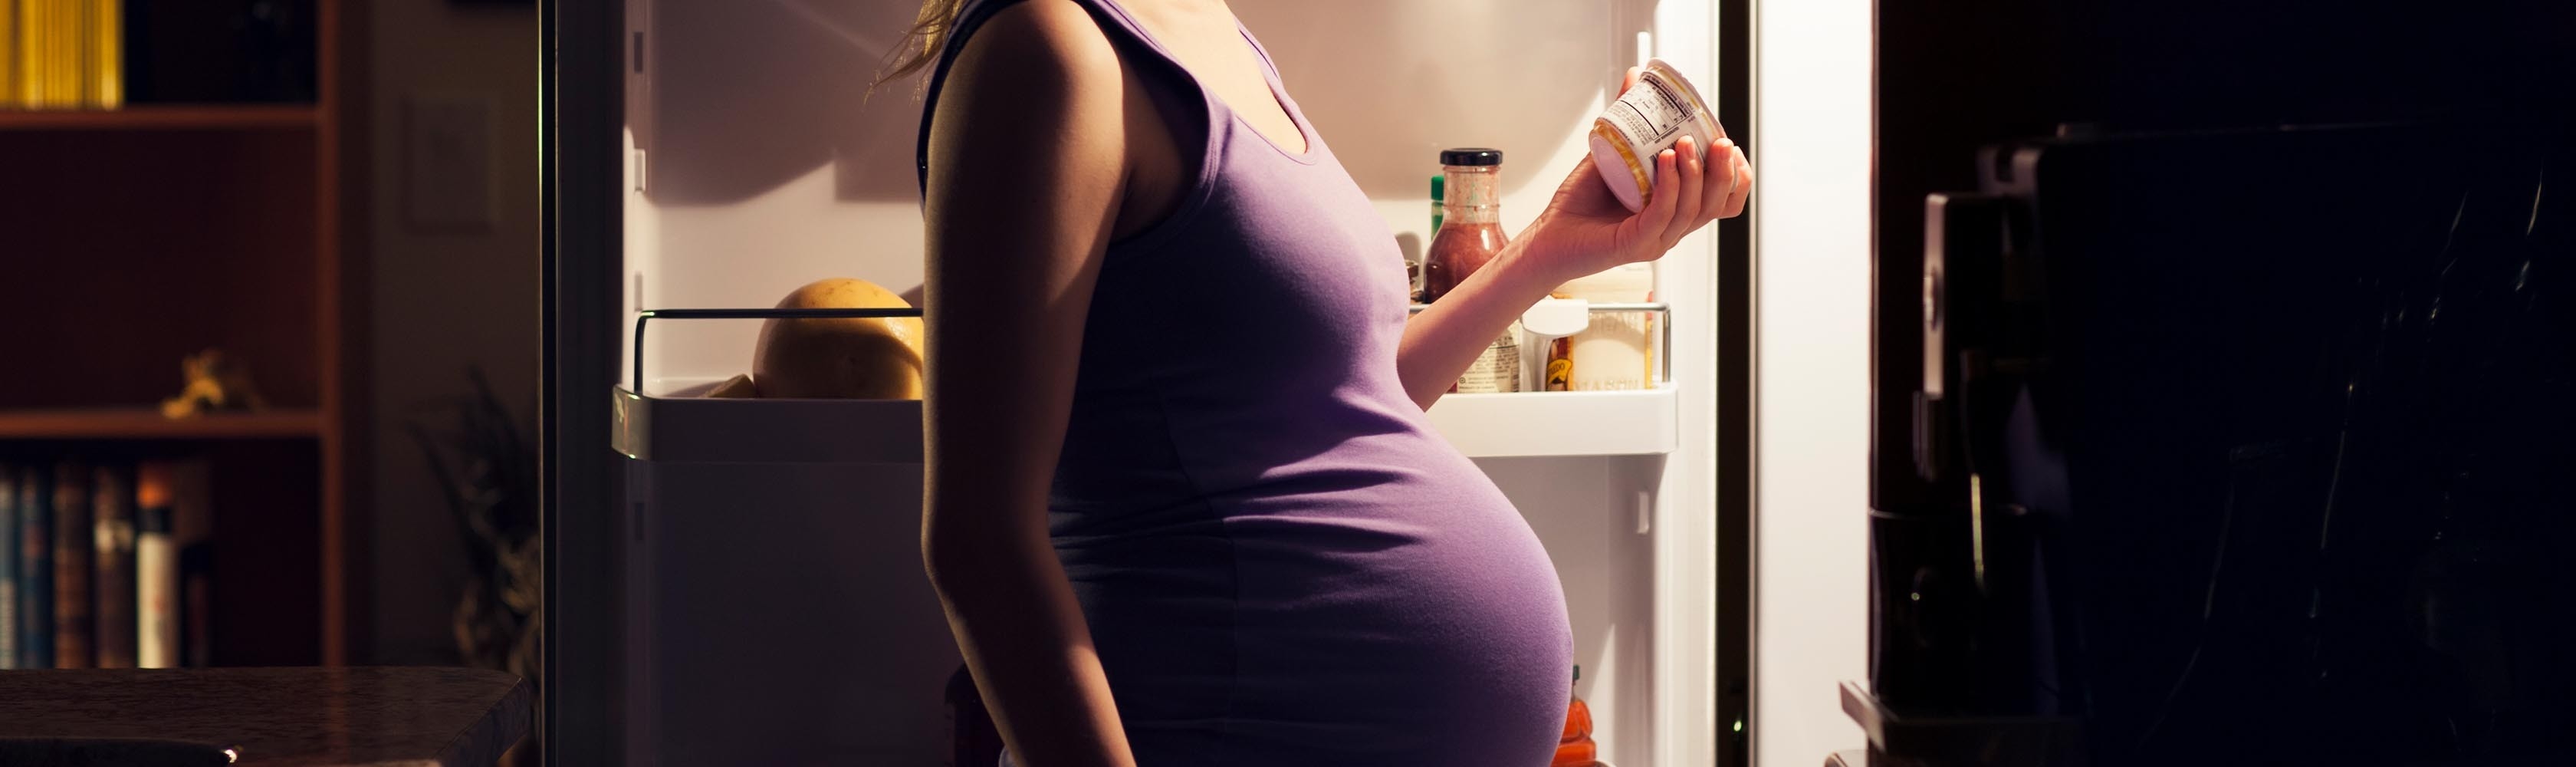 Ernährung während der Schwangerschaft – Schwangere Frau steht nachts vor dem Kühlschrank.